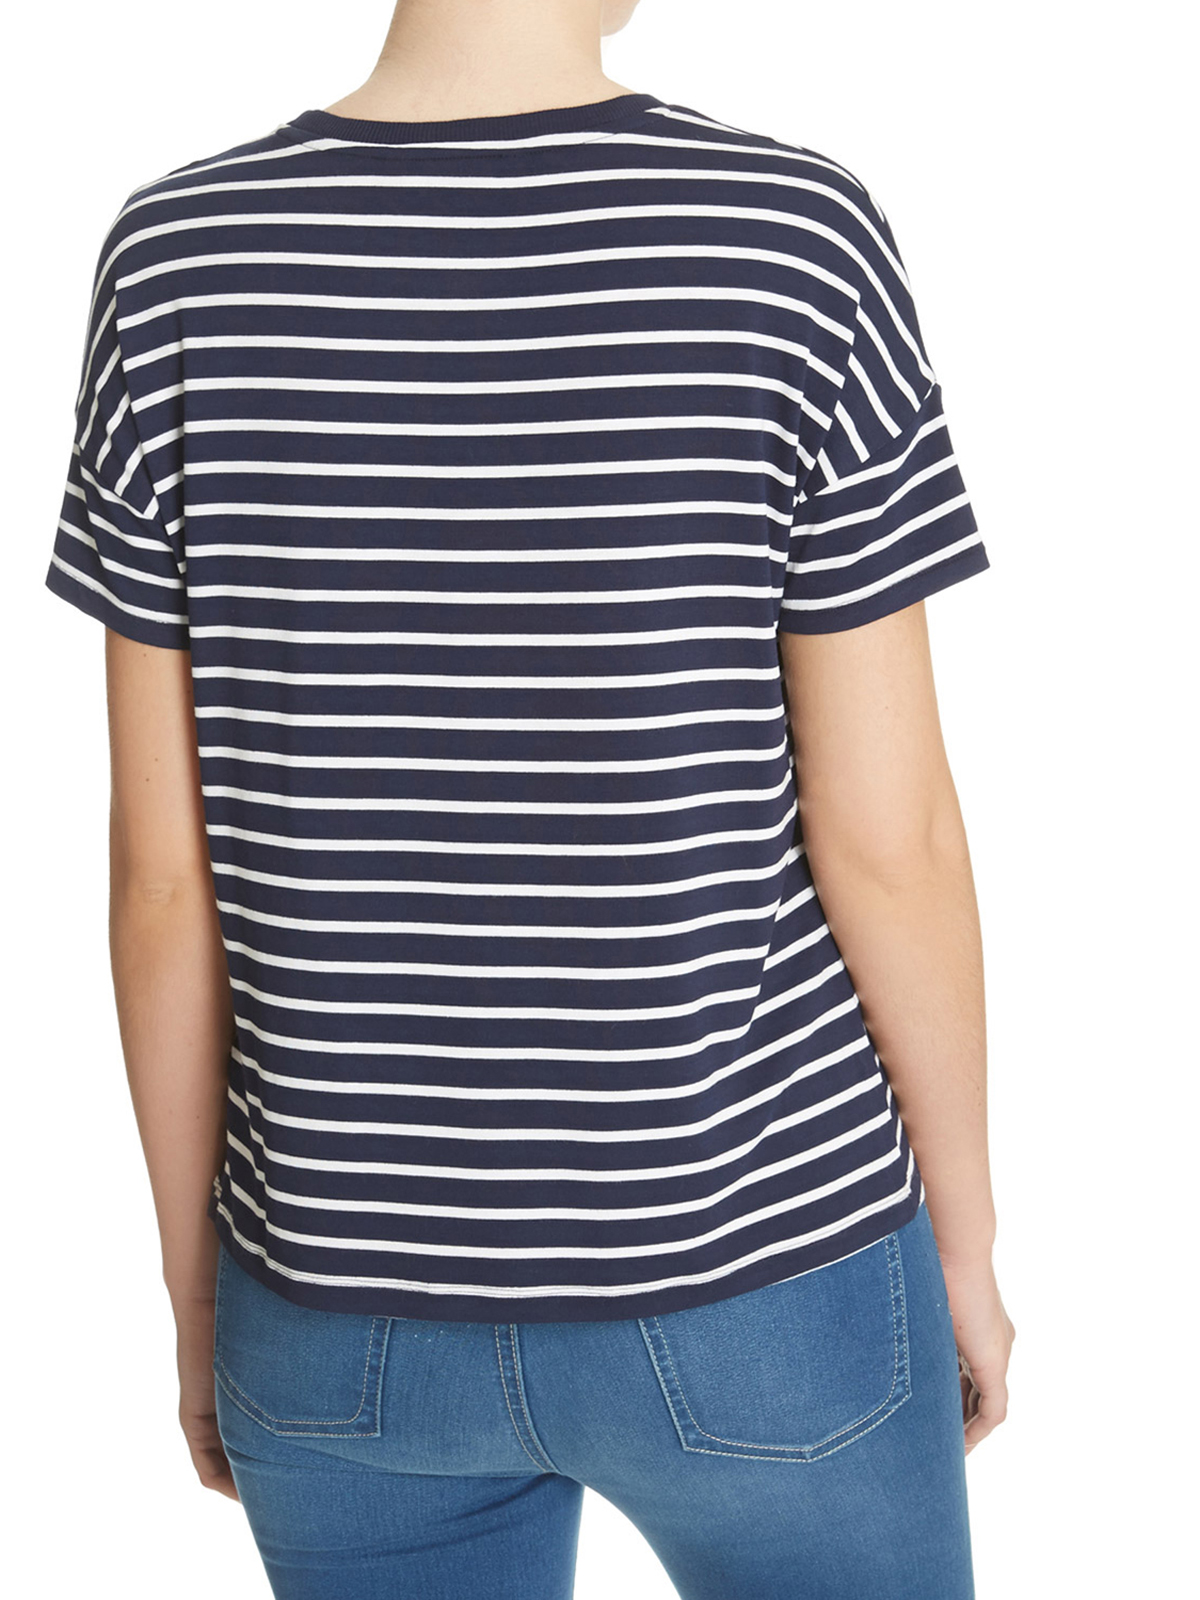 Dunn3s NAVY Short Sleeve Striped Jersey T-Shirt - Size 12 to 20